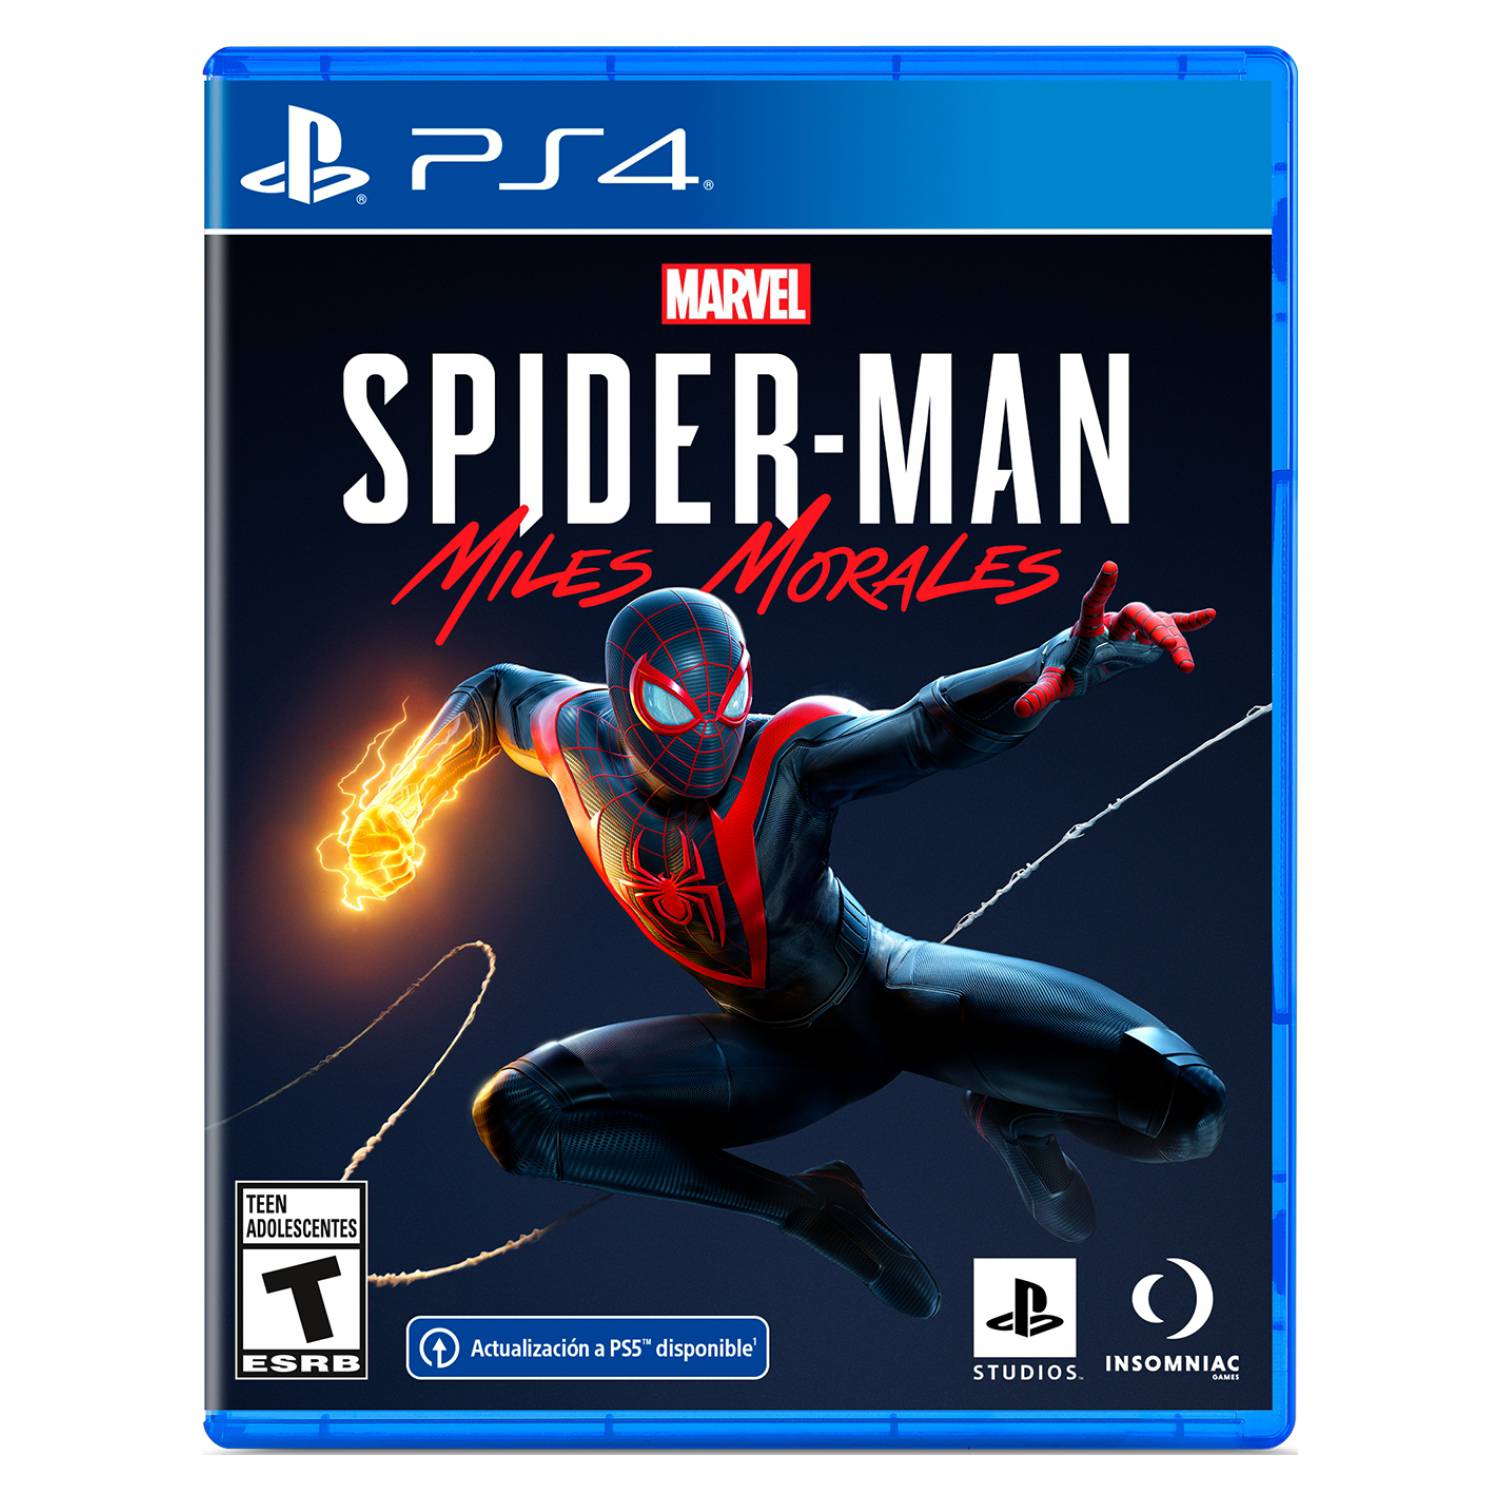 PLAYSTATION Spider-Man Miles Molares - PS4 